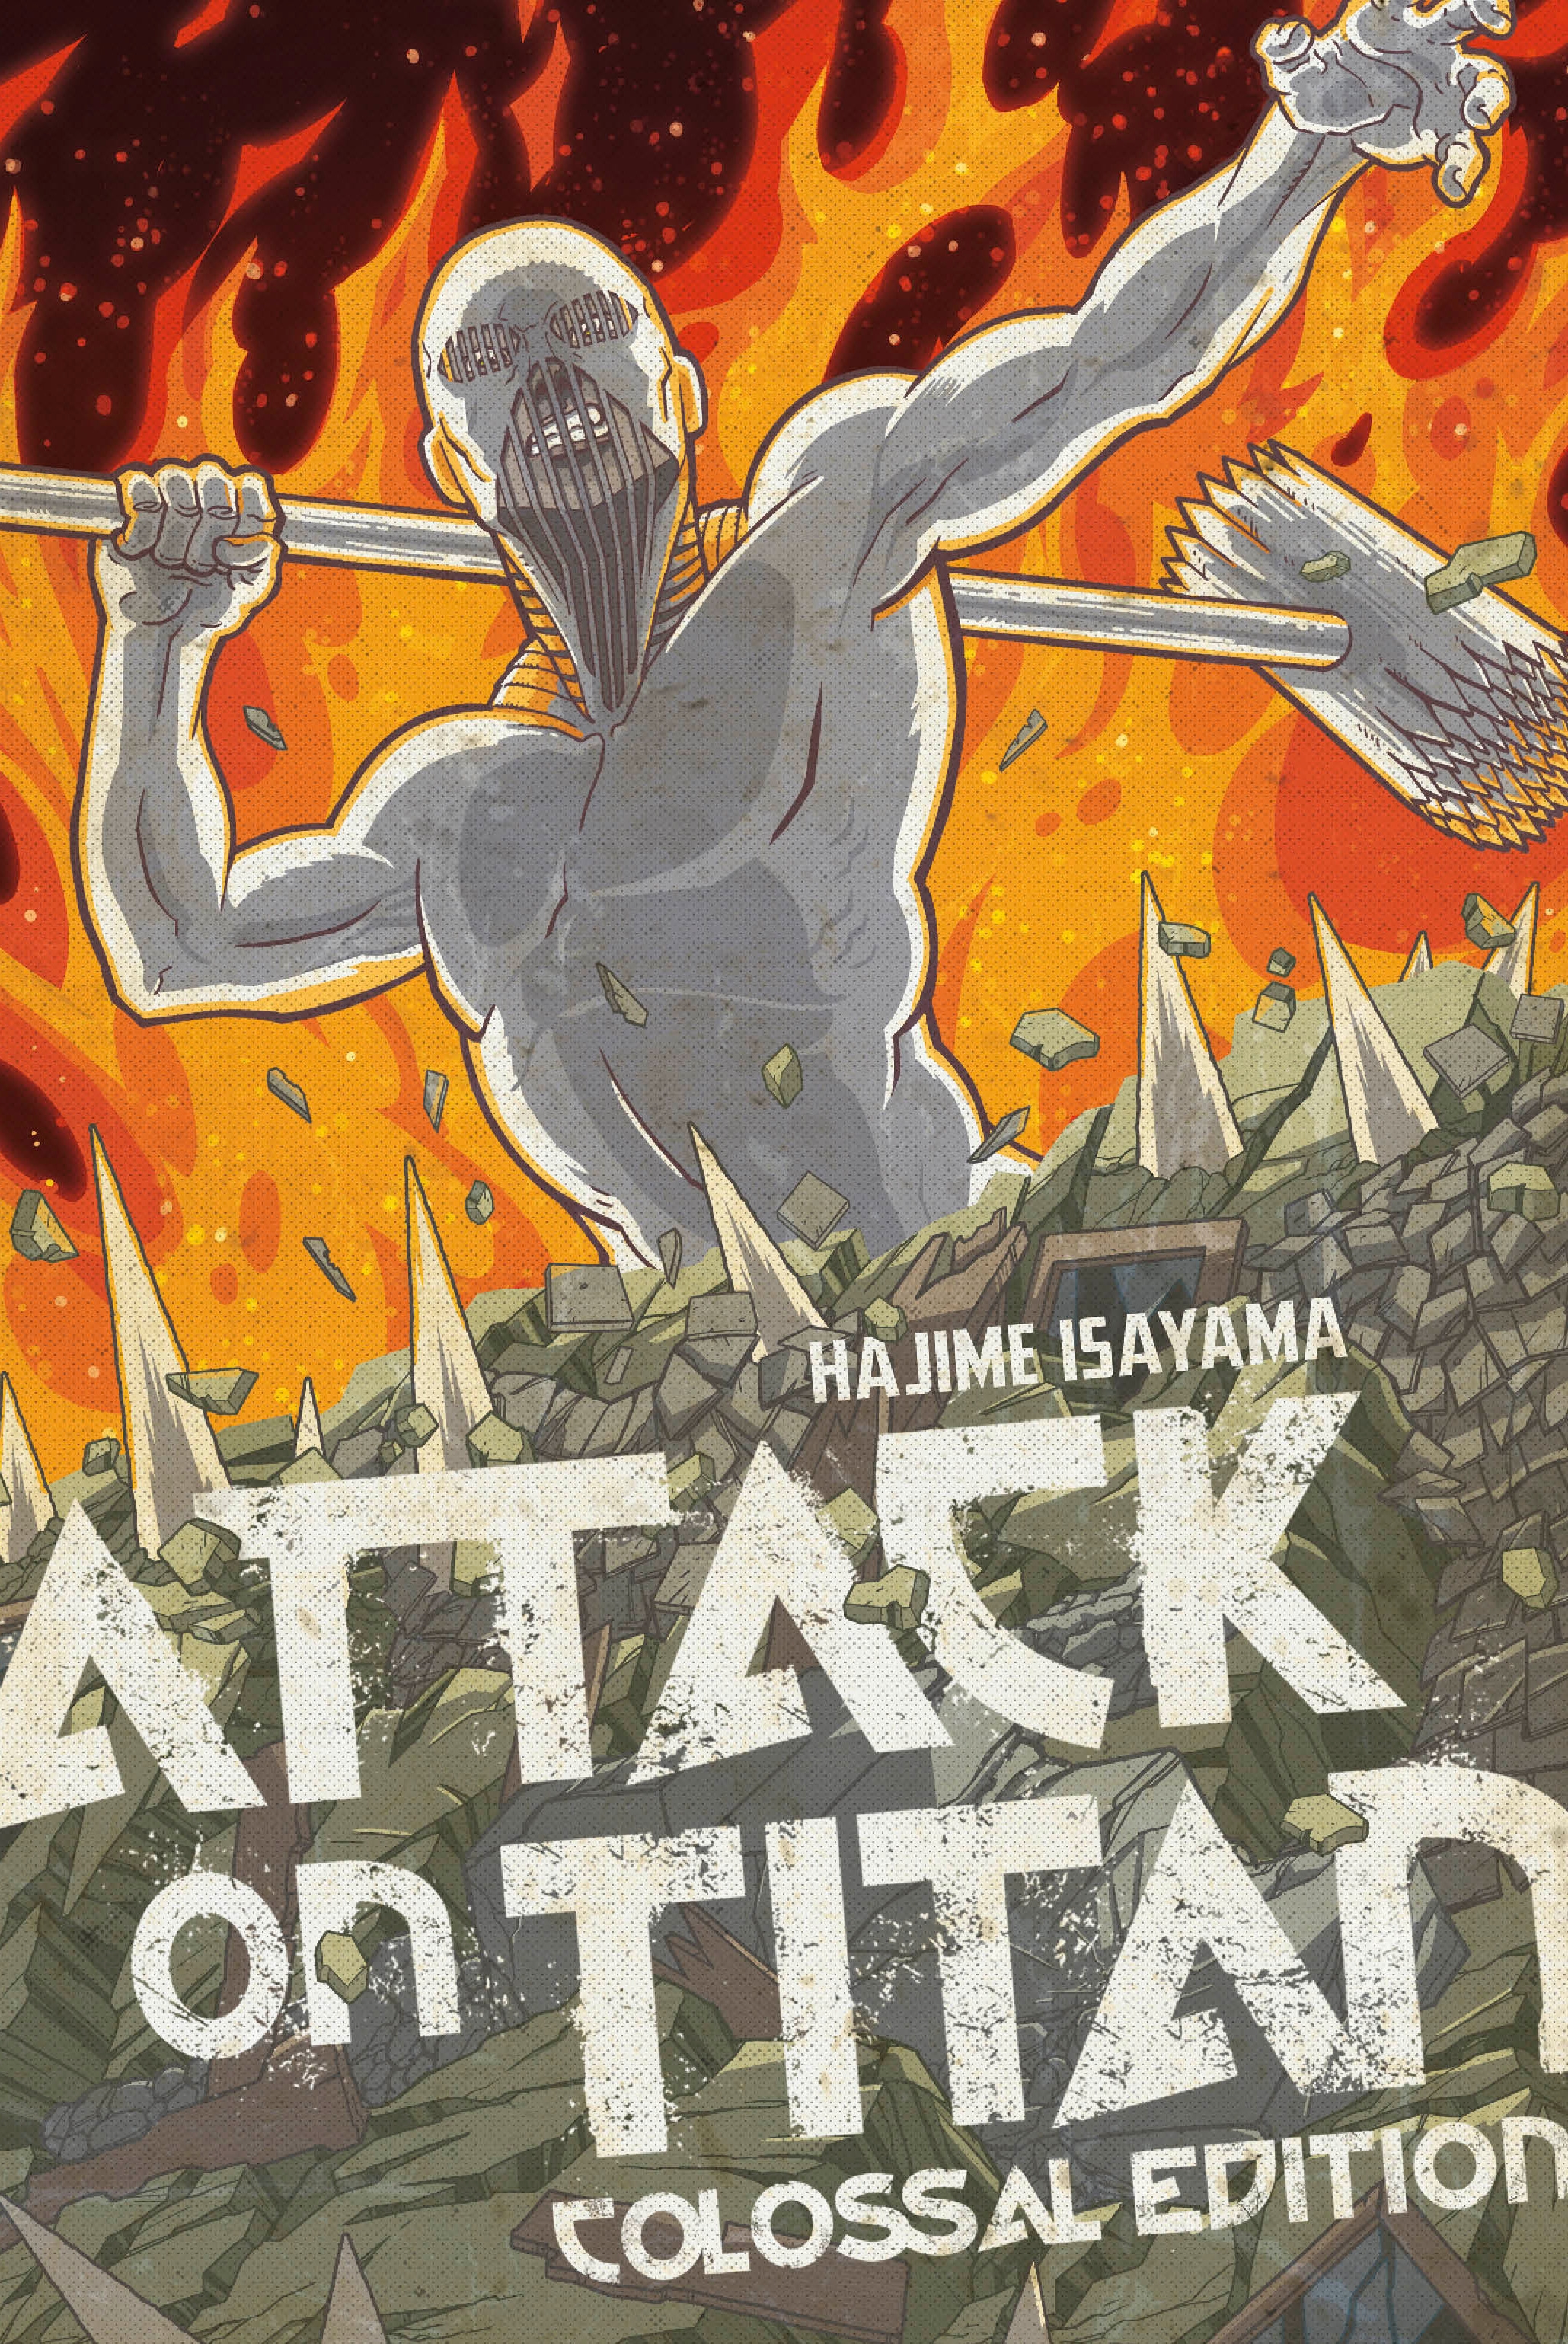 attack on titan author